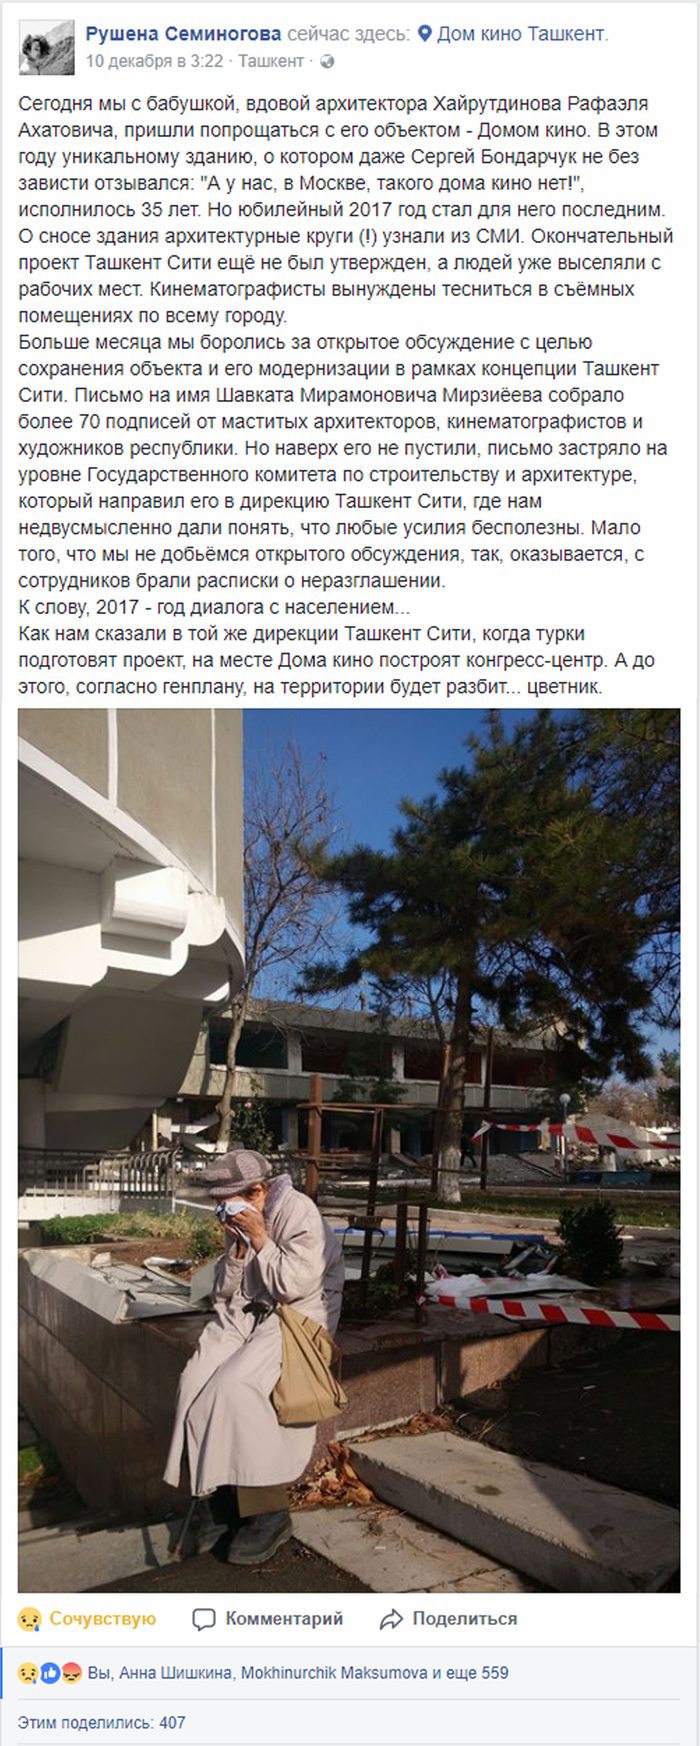 About the demolition of the Cinema House in Tashkent. - My, Architecture, Tashkent, Demolition, Constructivism, Longpost